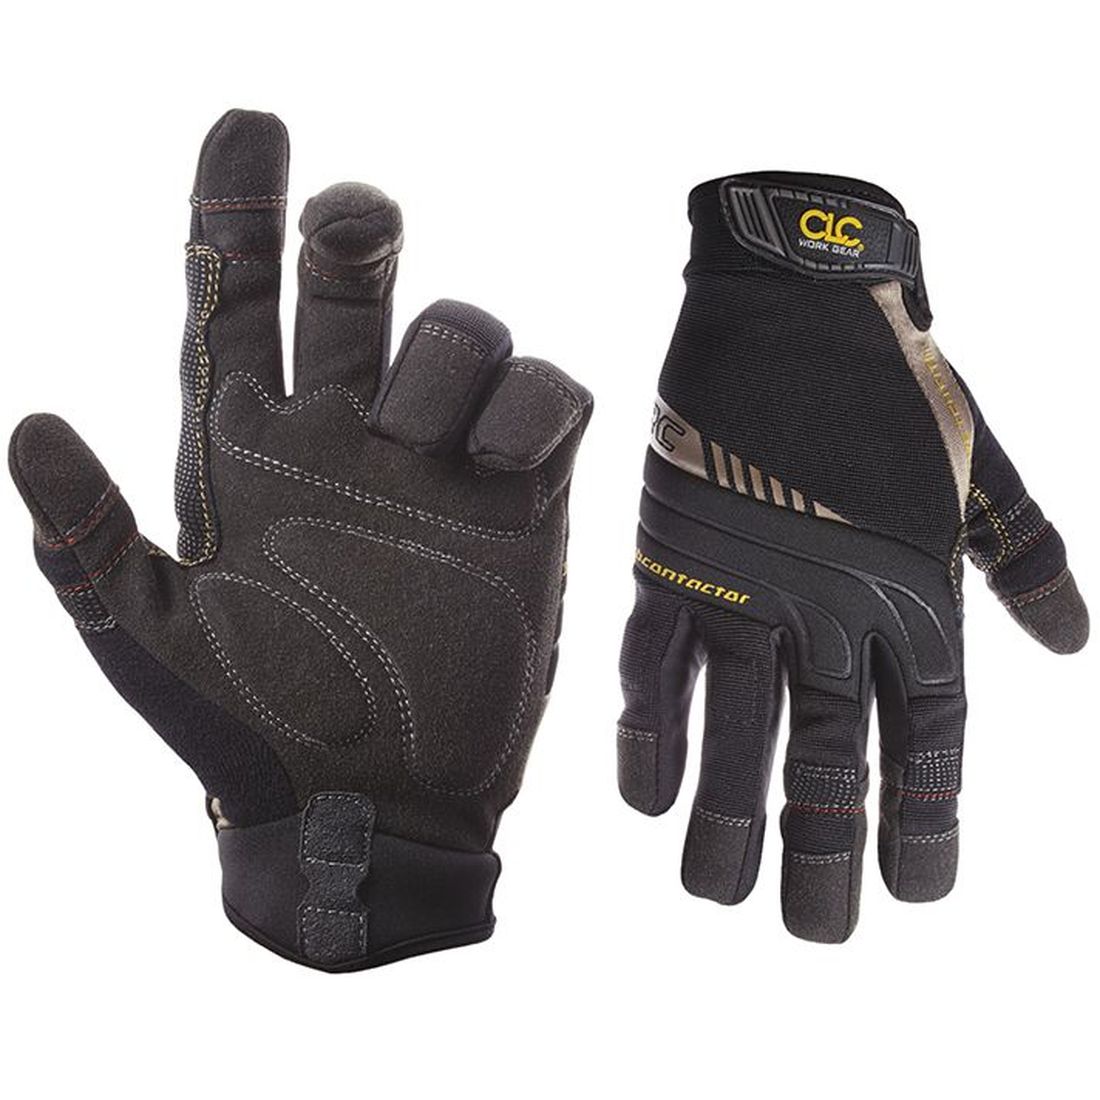 Kuny's Subcontractor Flex Grip Gloves - Medium                                       